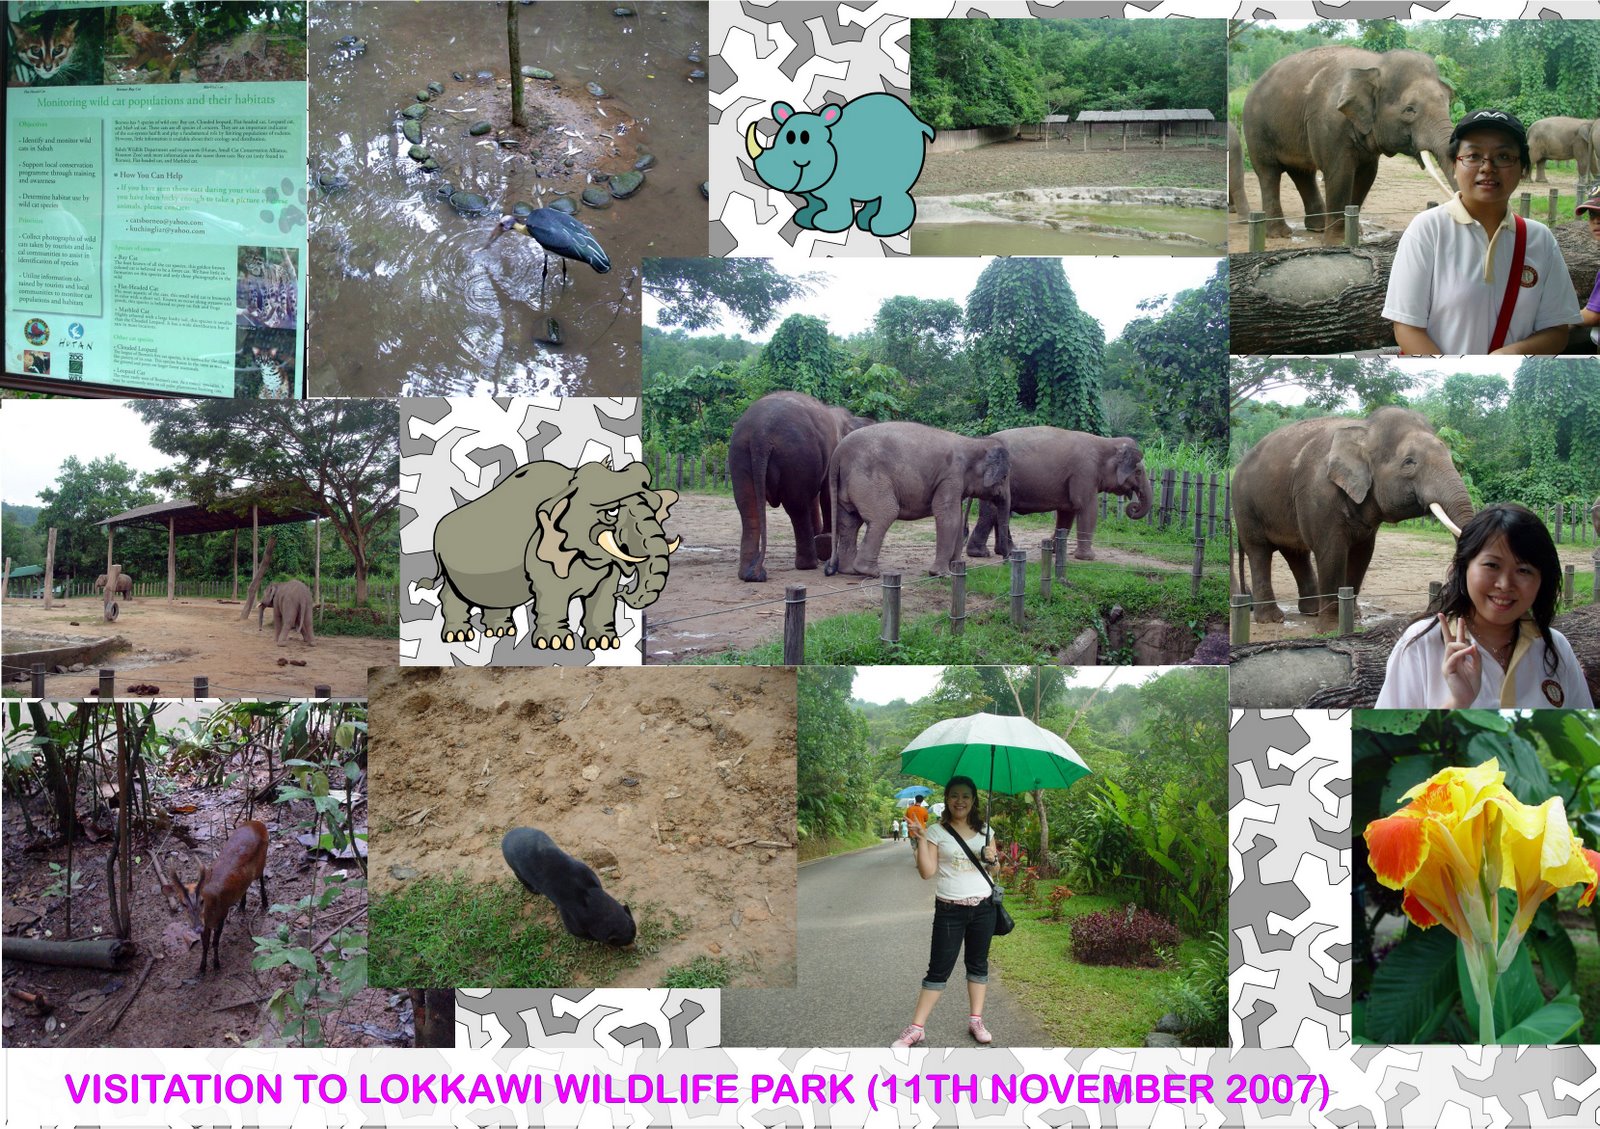 Visitation to Lokkawi Wildlife Park (11th November 2007)